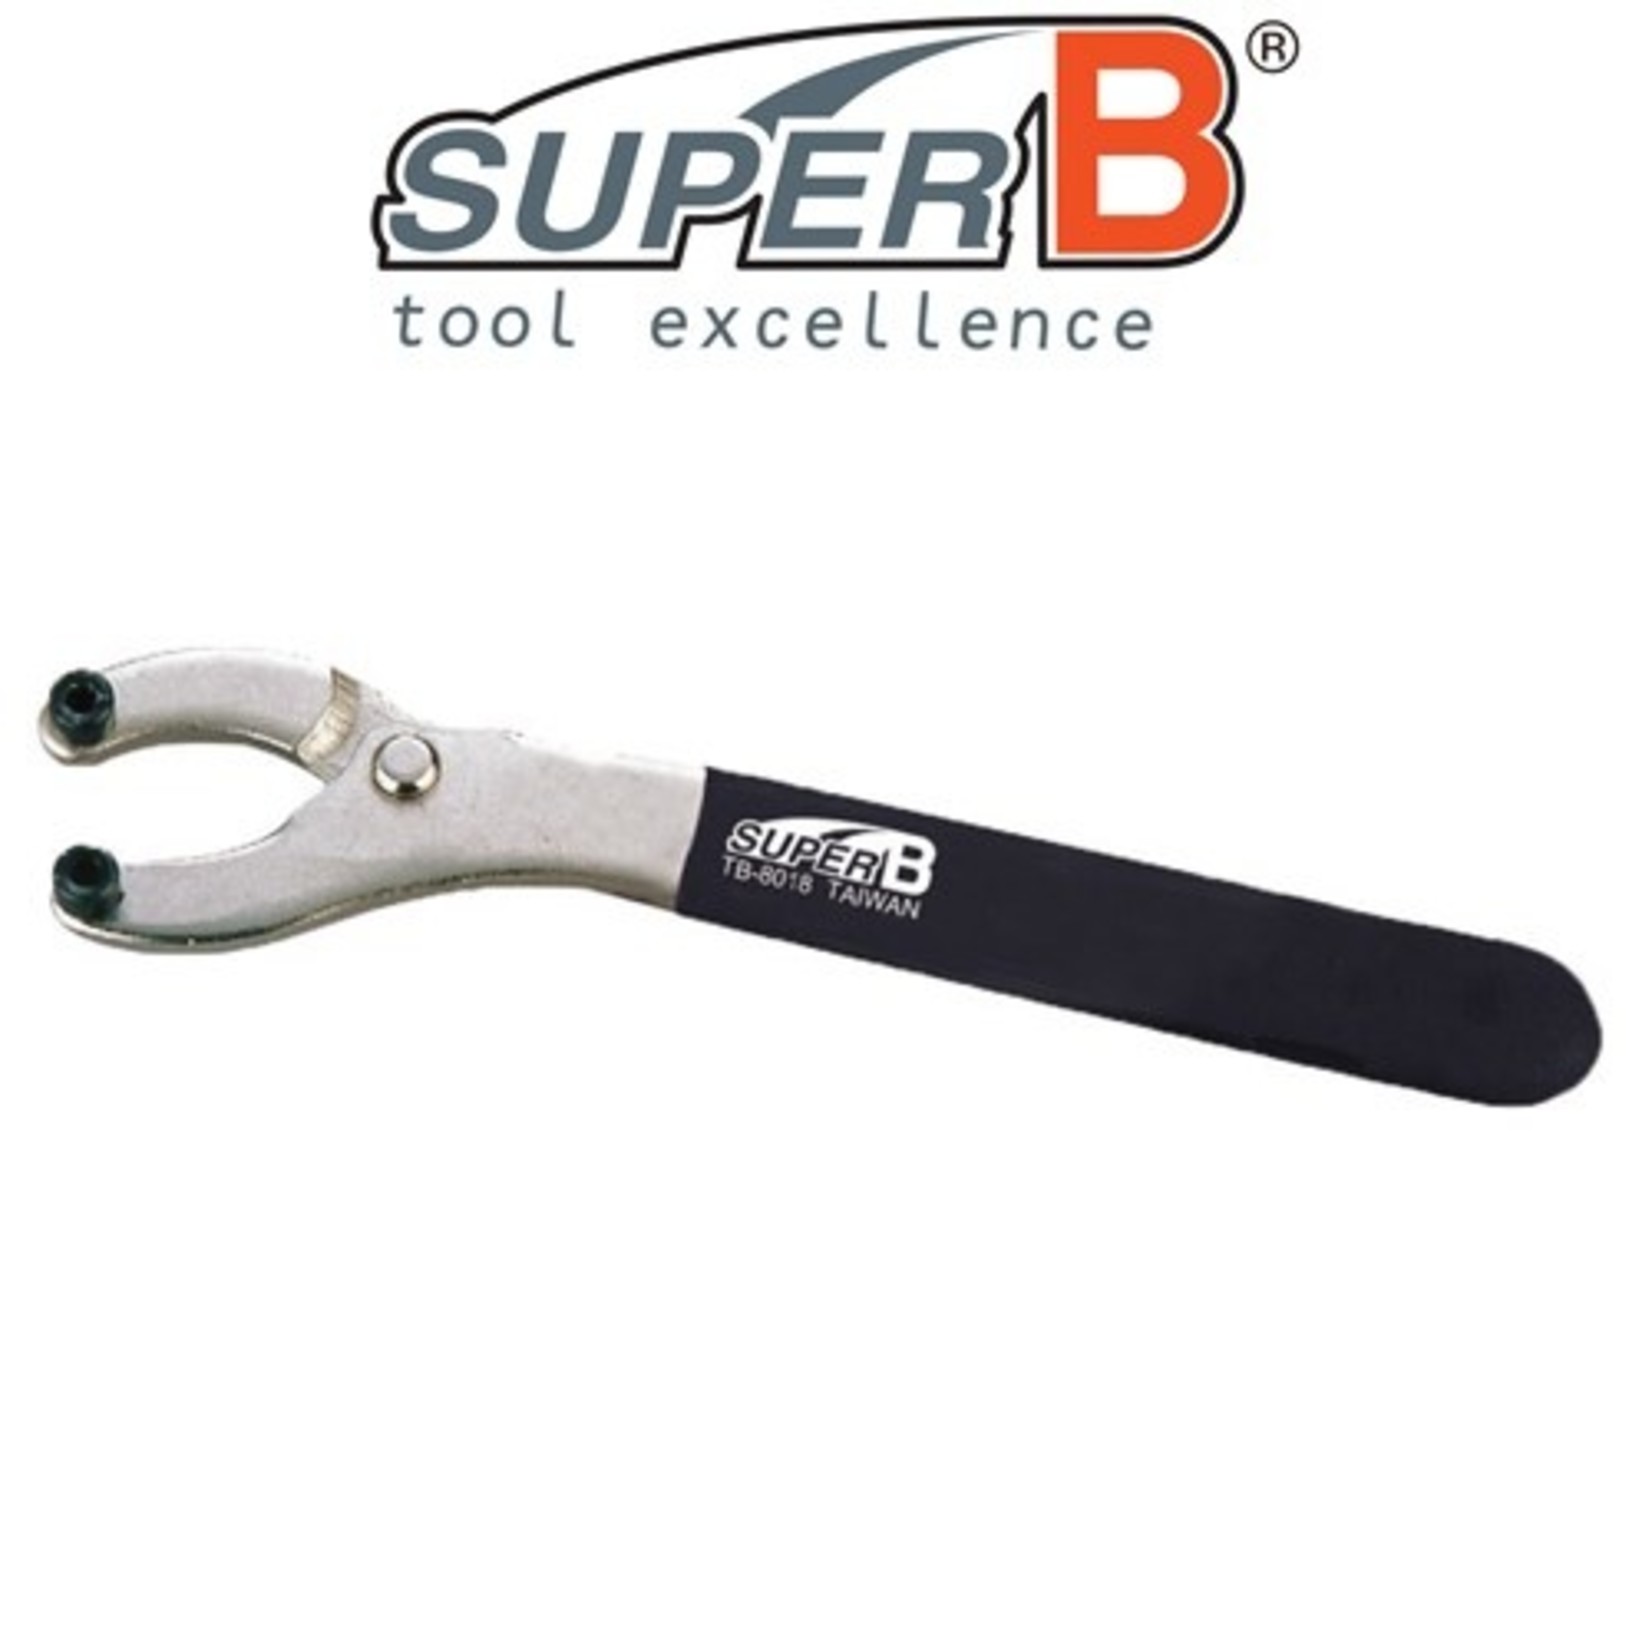 Super B SuperB Heavy Duty Bottom Bracket Cup Tool - Bike Tool - TB8015